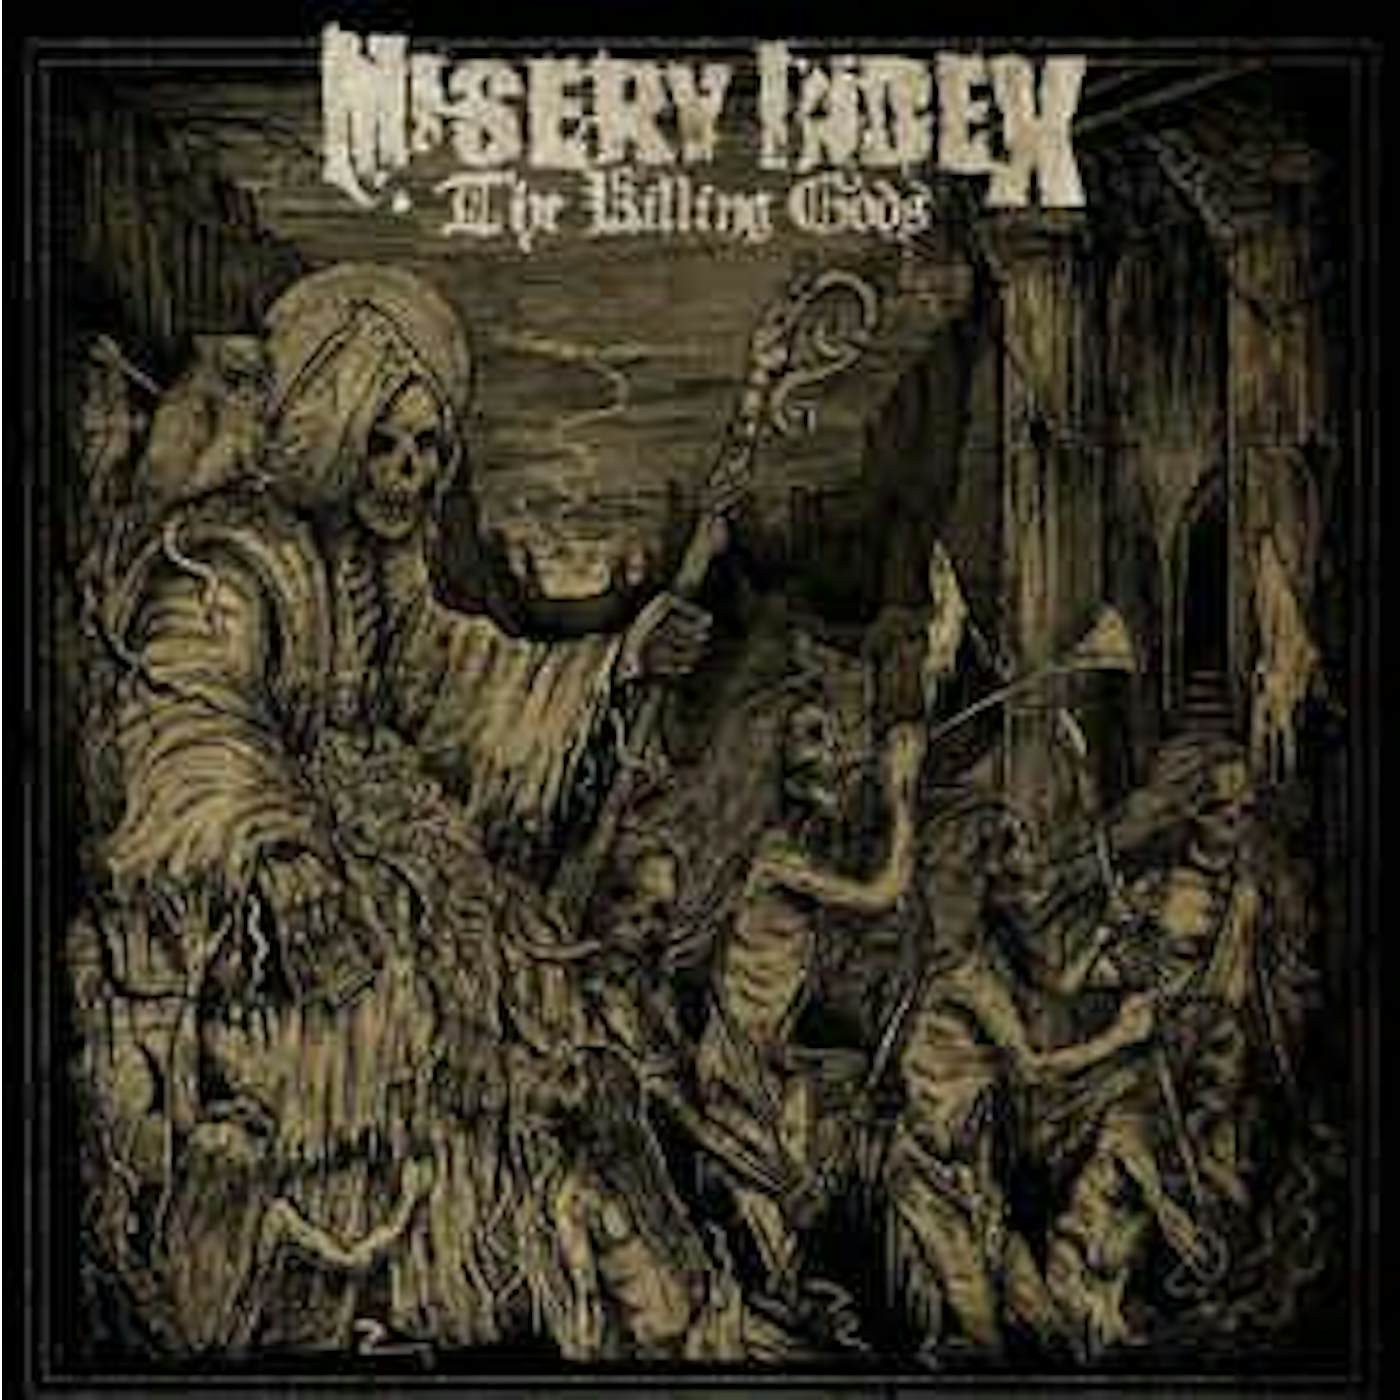 Misery Index KILLING GODS CD